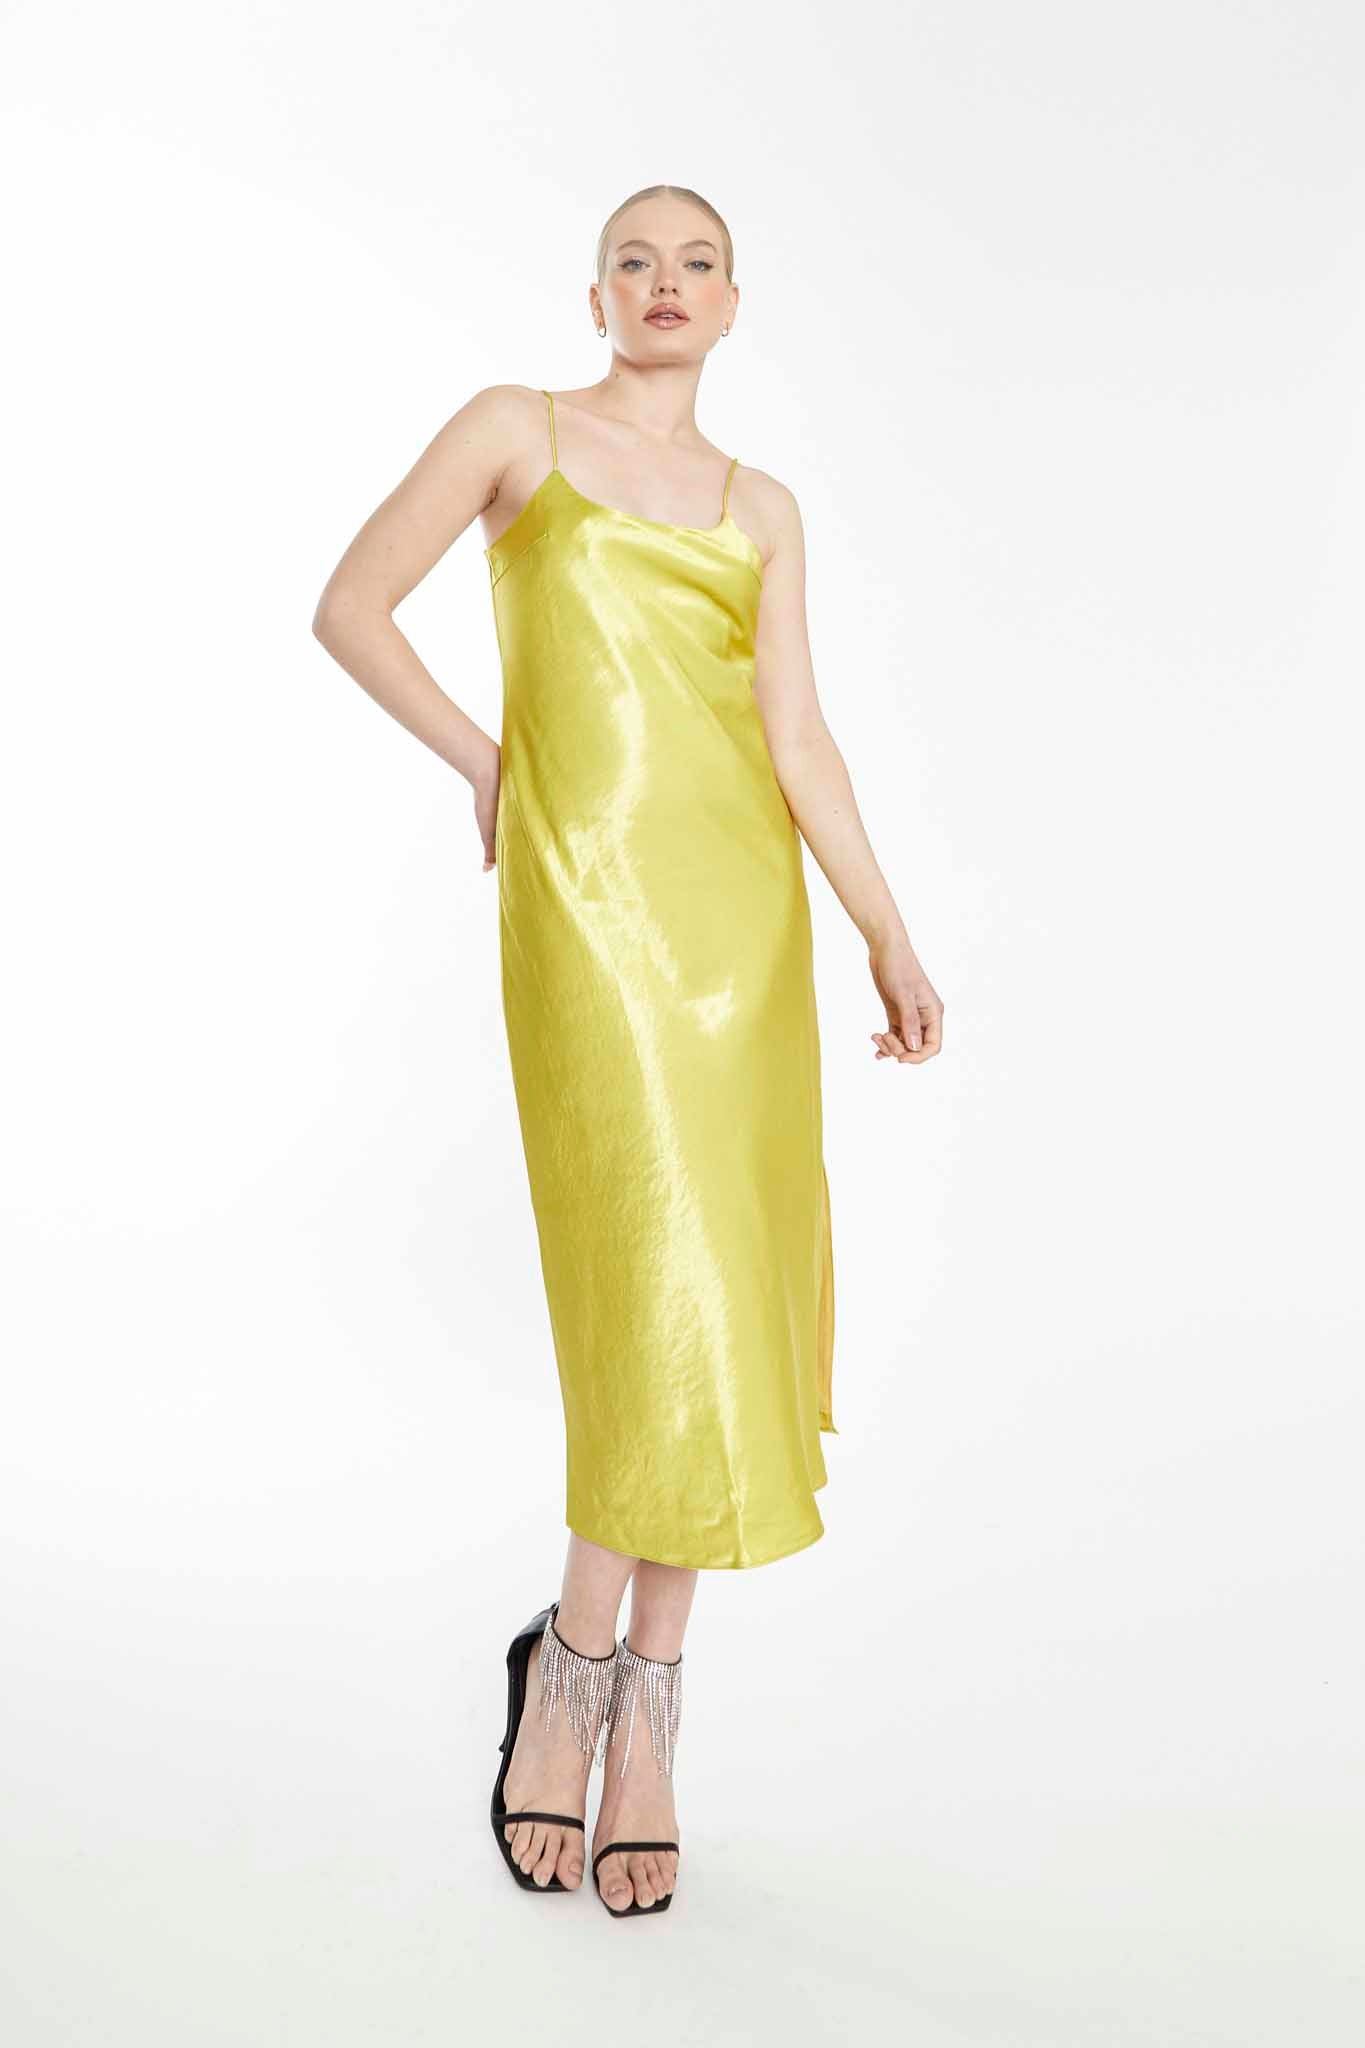 Glamorous Lime Bias-Cut Midaxi Dress with Side Split